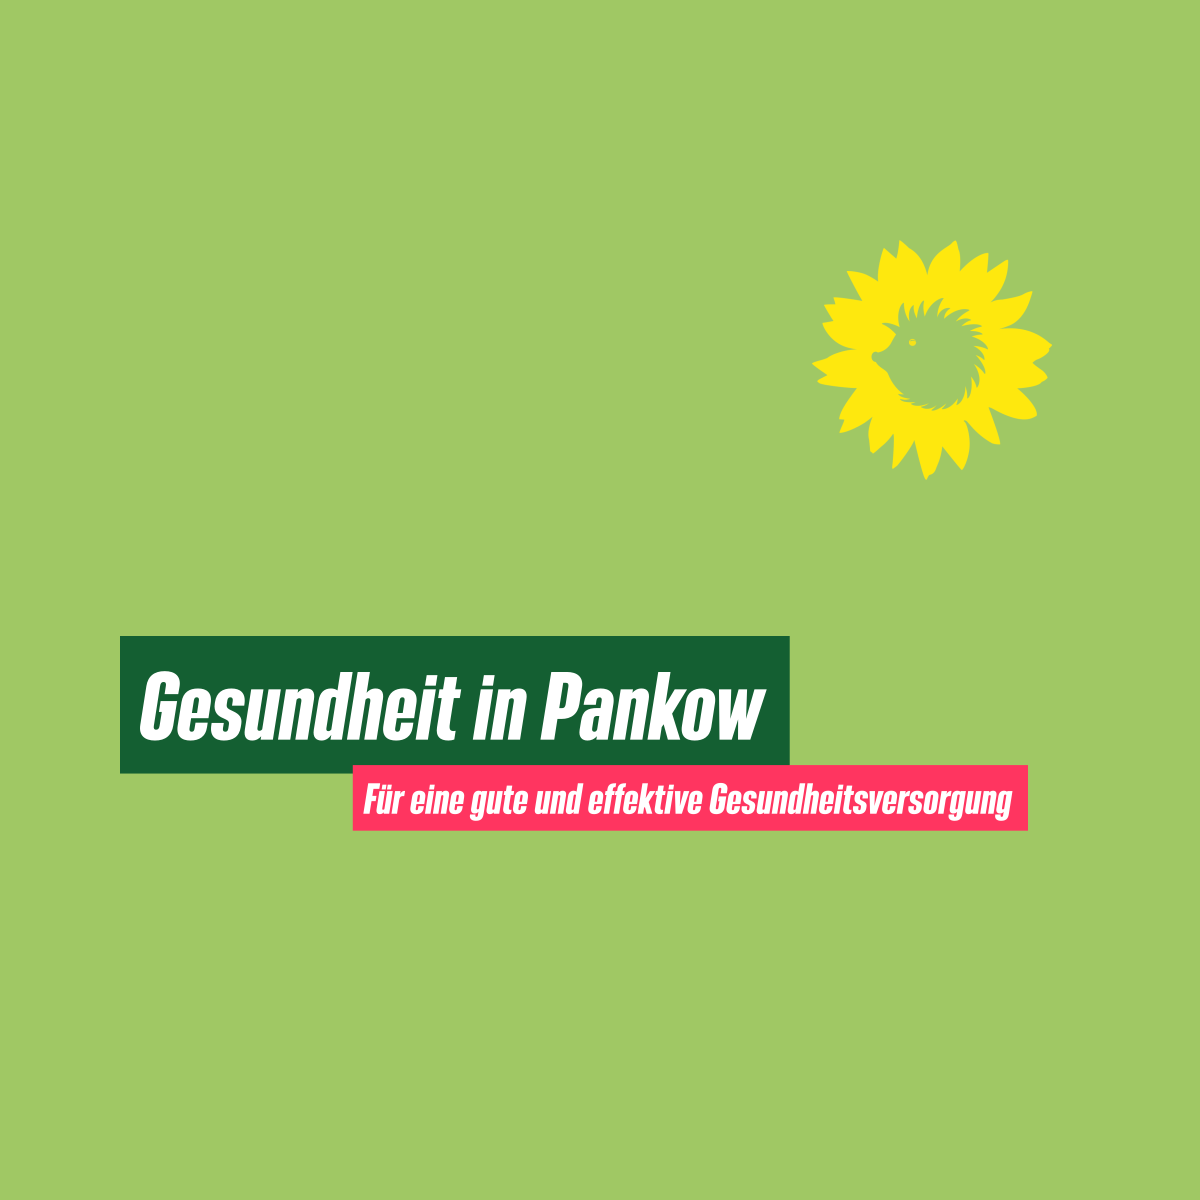 Text: "Gesundheit in Pankow"